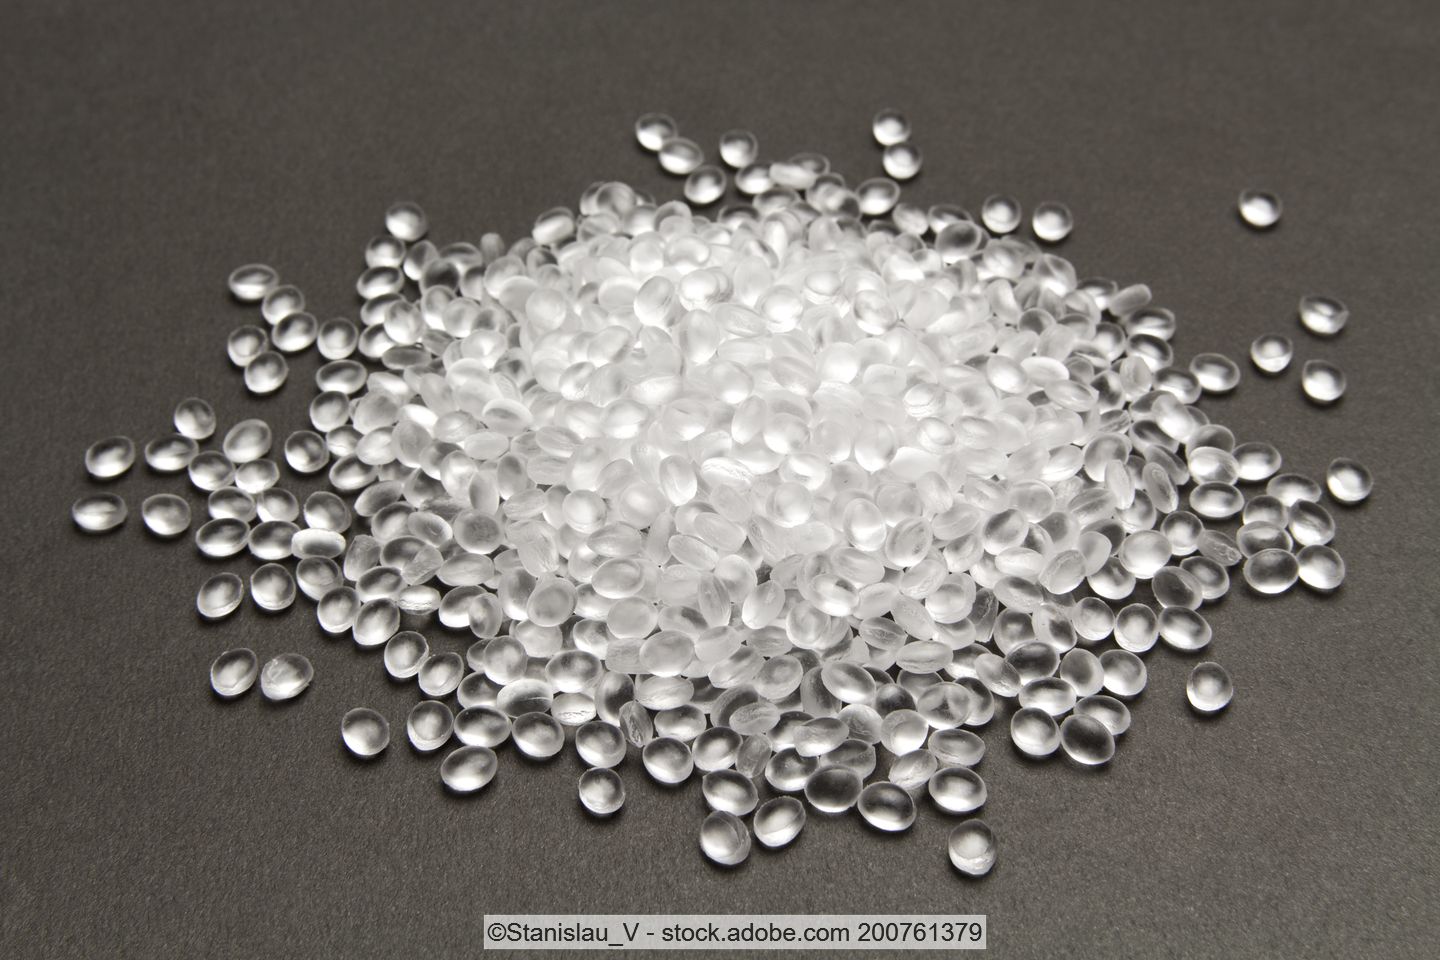 Transparent plastic pellets on a dark surface